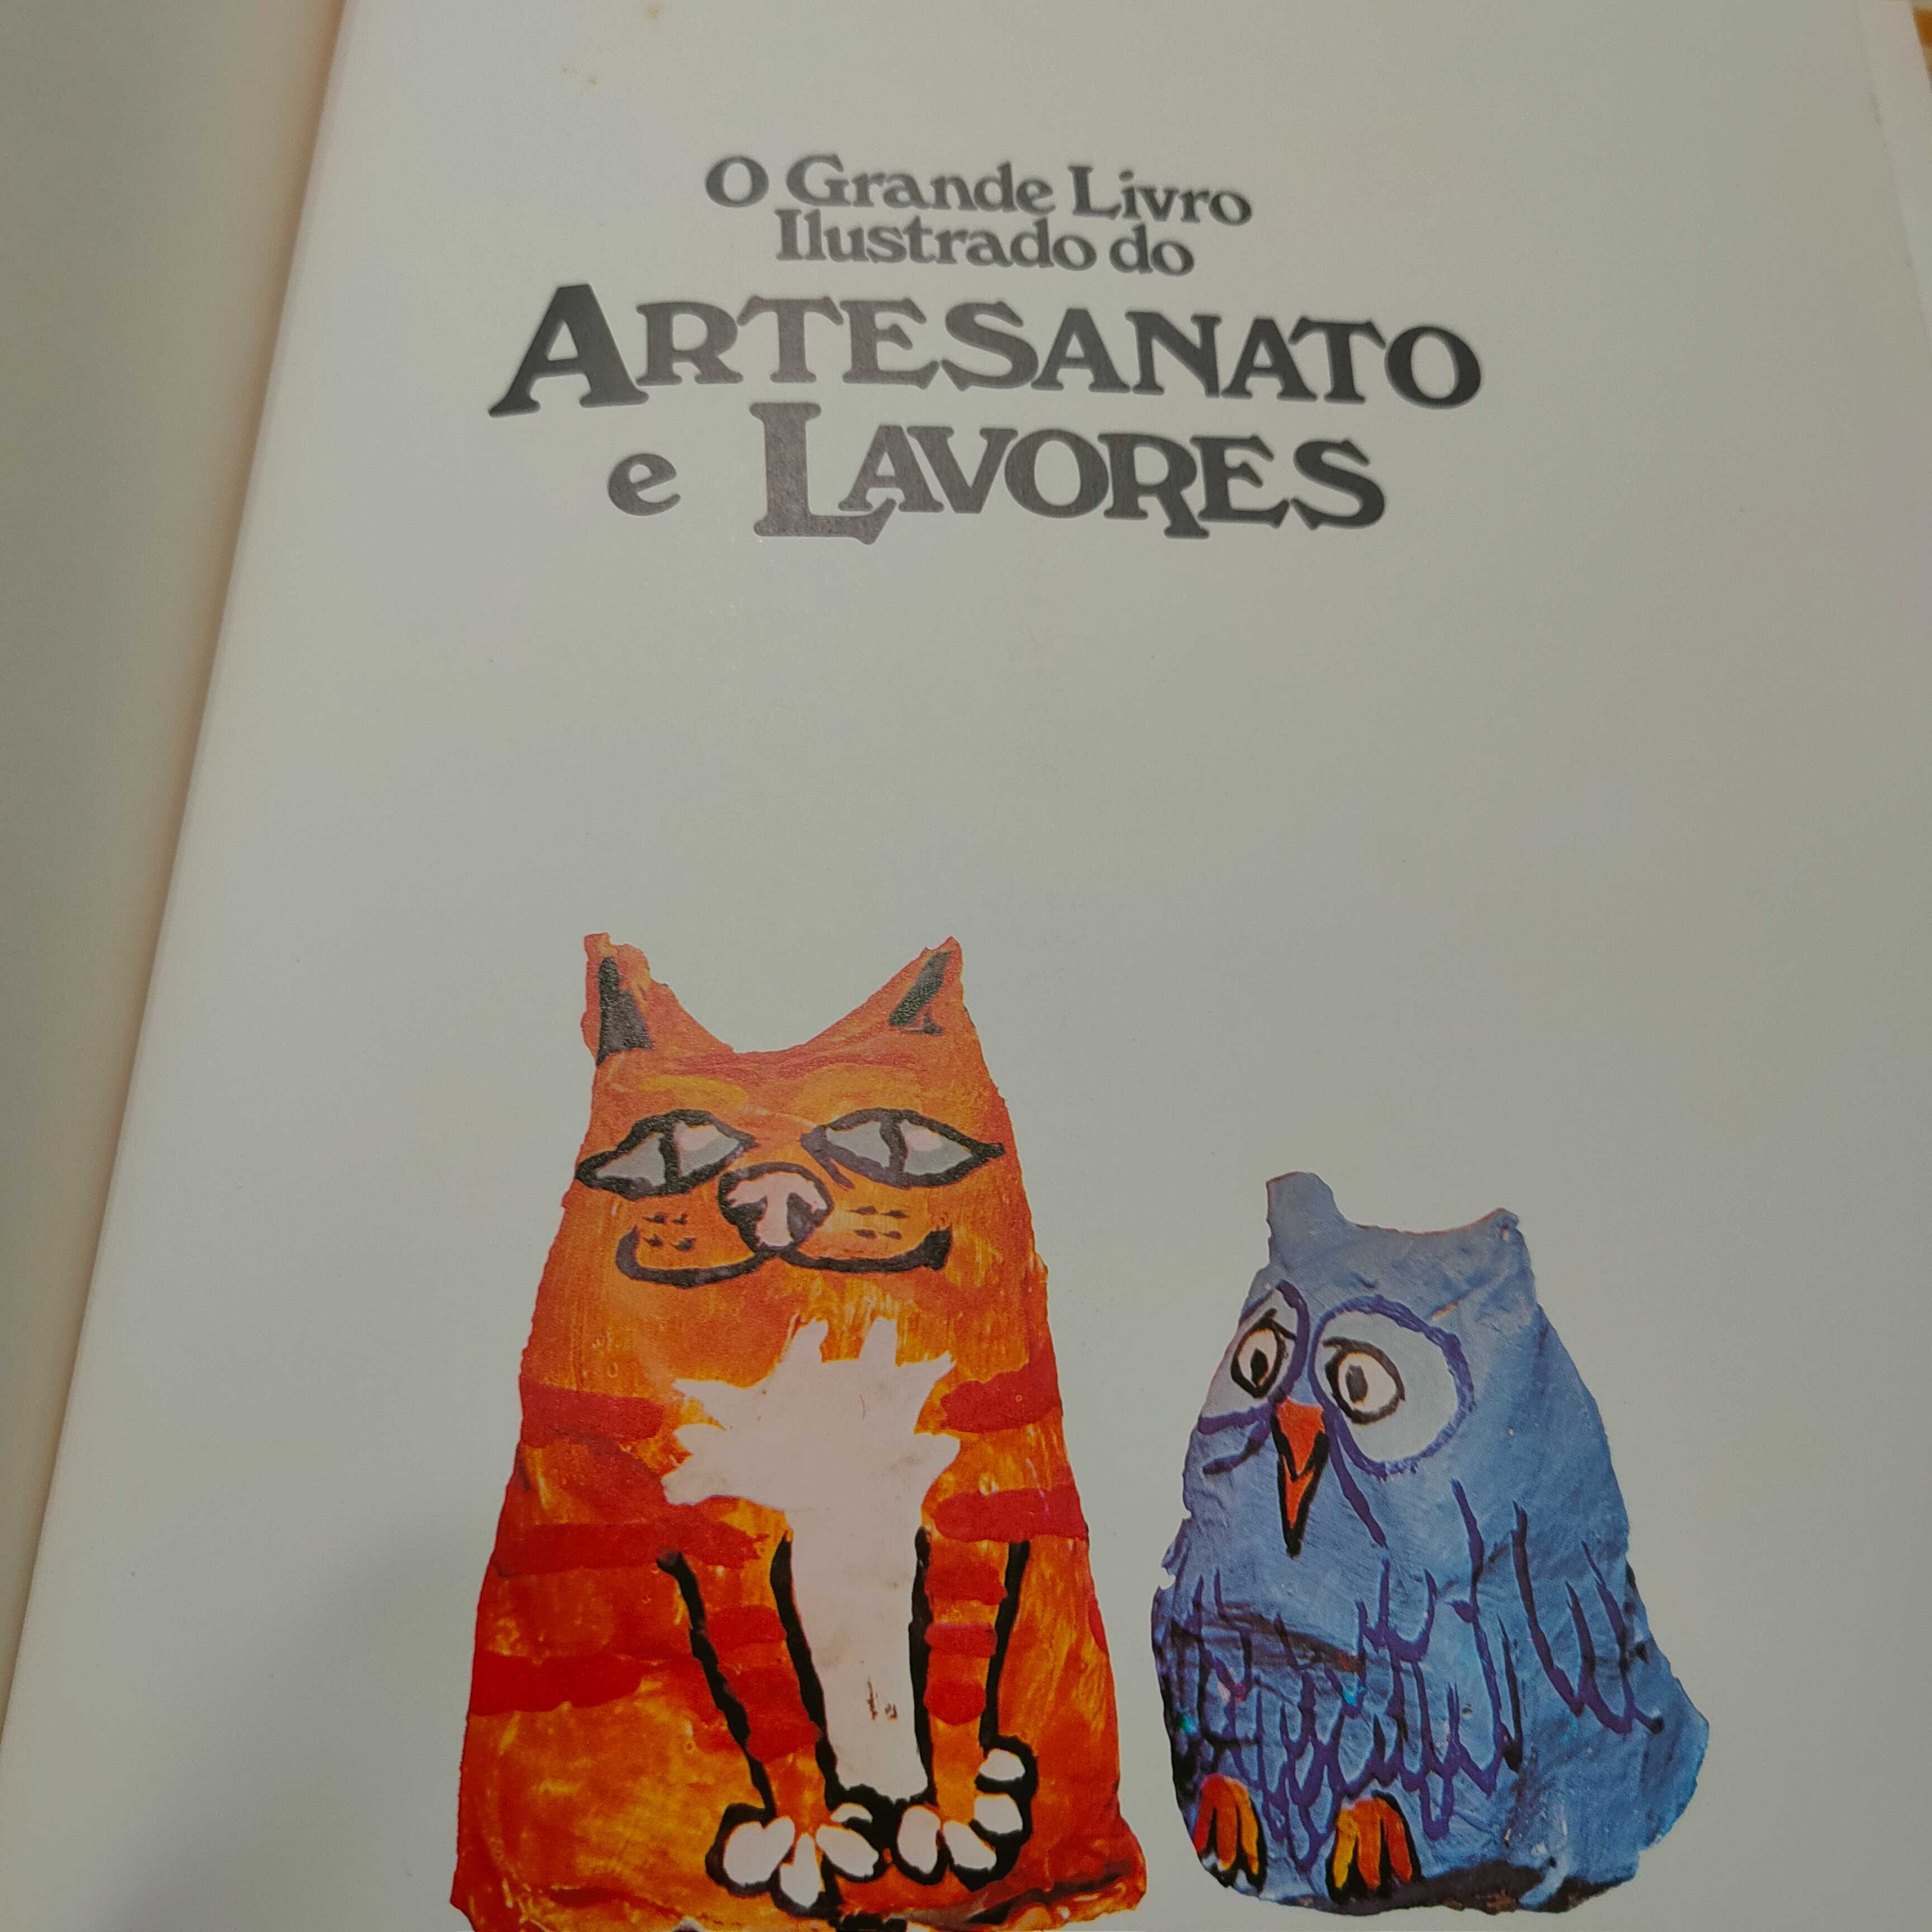 O Grande Livro Ilustrado do Artesanato e Lavores